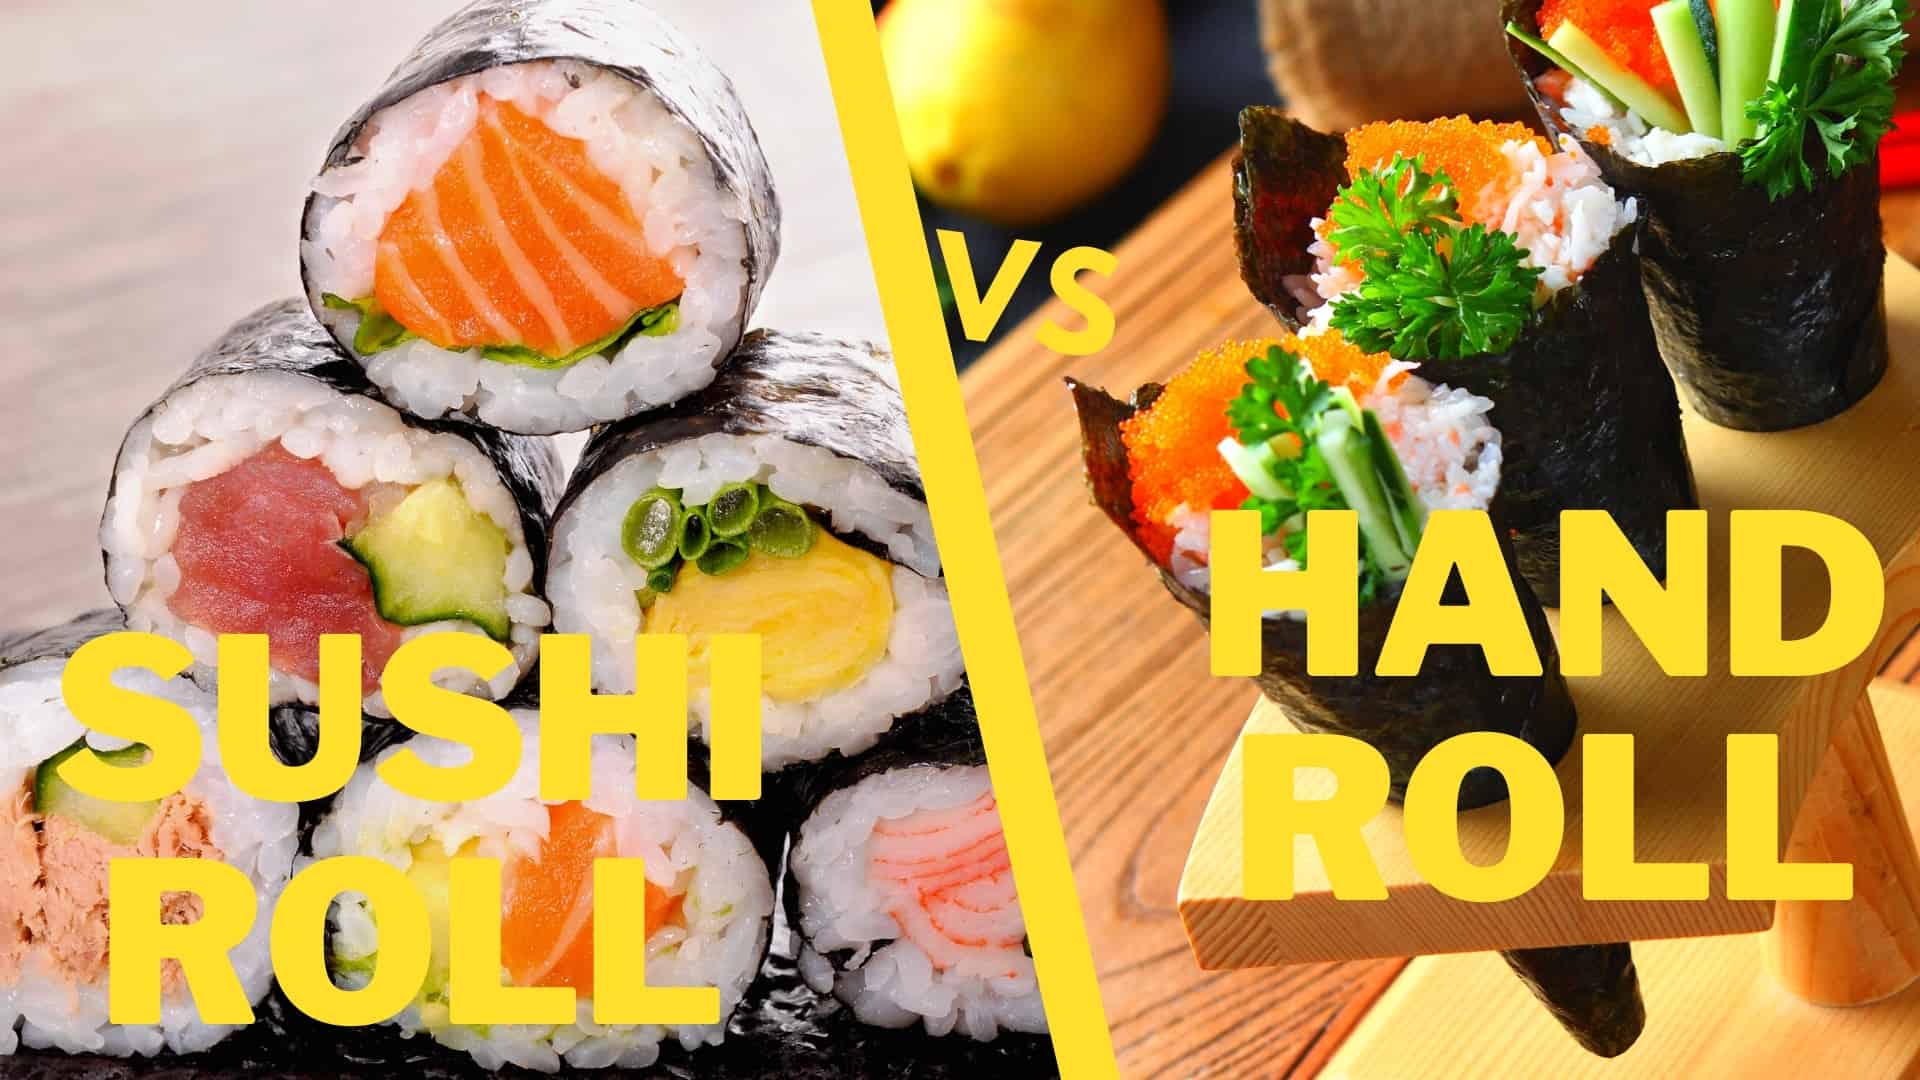 Sushi roll vs hand roll